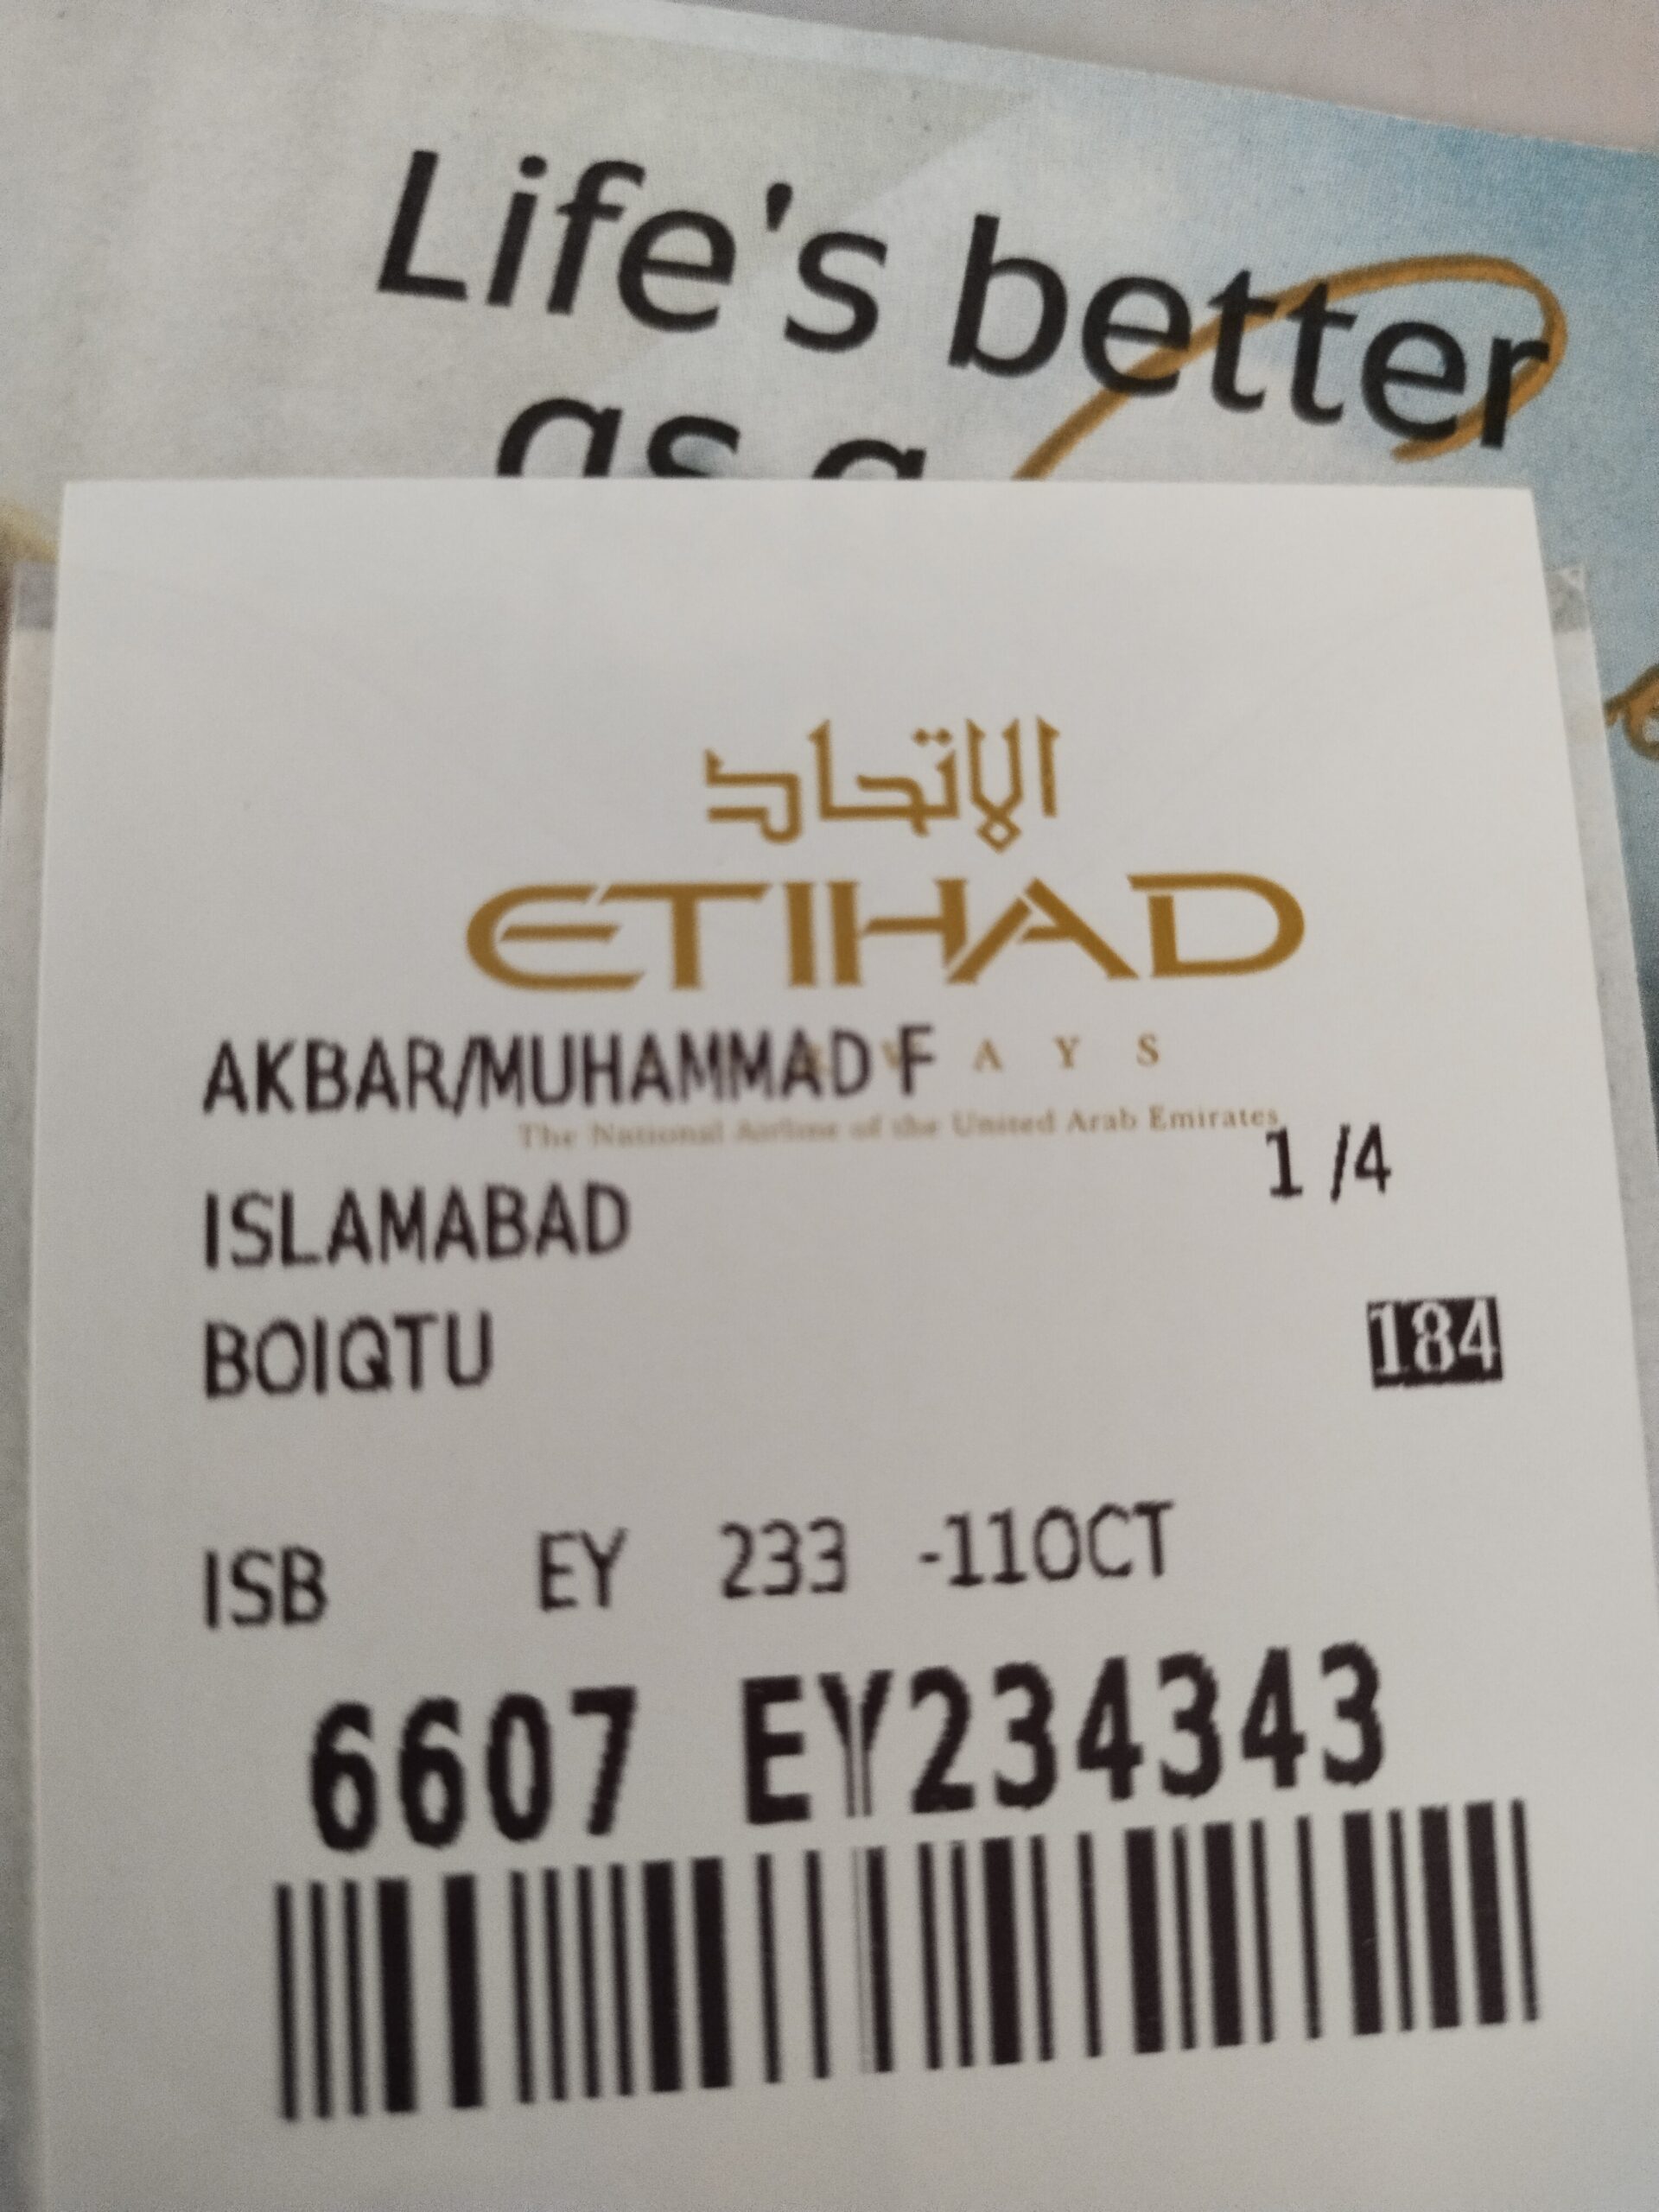 Etihad Airways complaint Stuff stolen from baggage